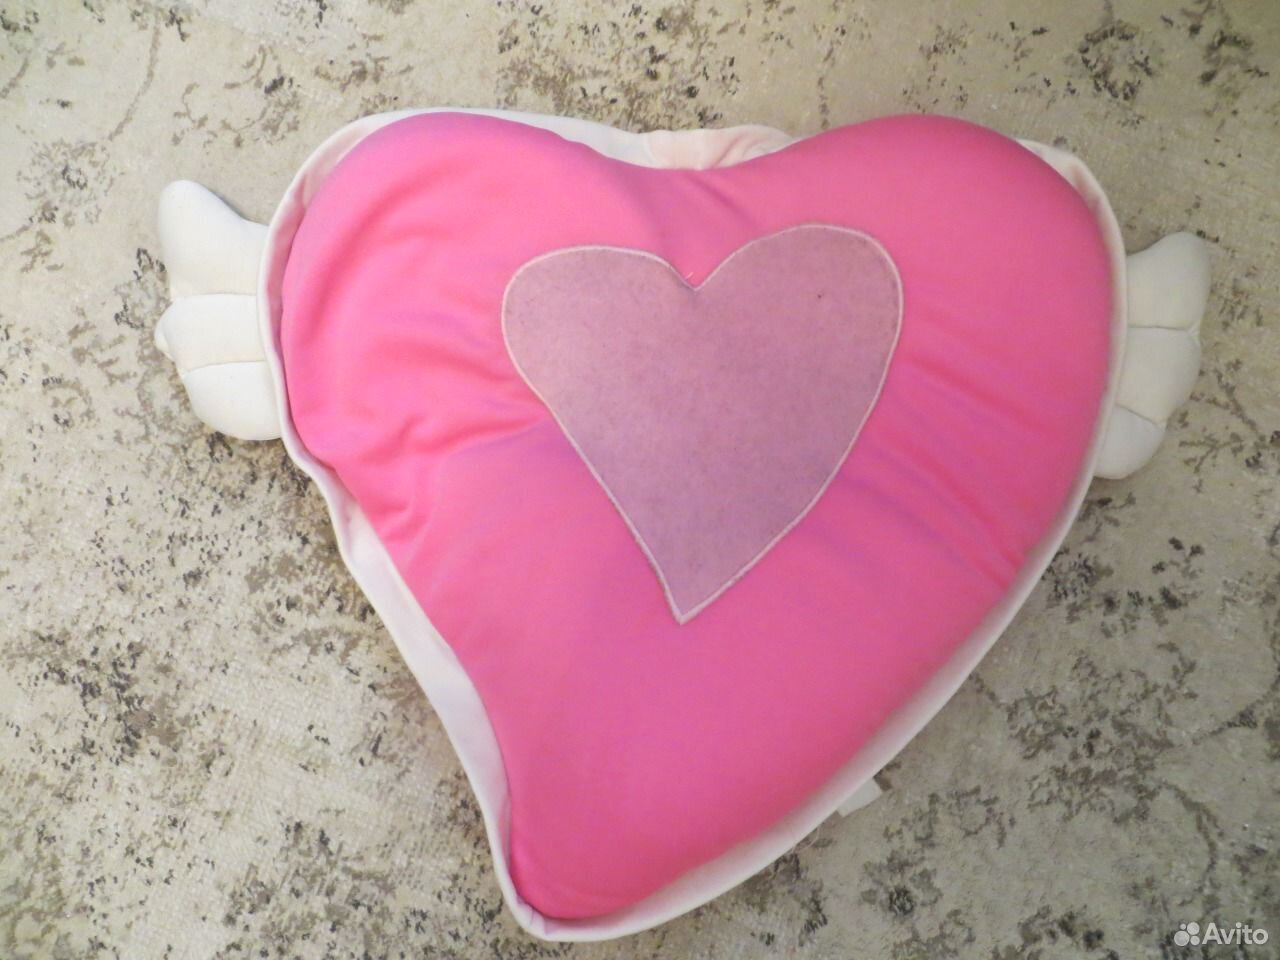 На кровати одна подушка сердце. Подушка сердце розового цвета. Сердечком подушка в детскую кроватку. Подушка послеоперационная на сердце. Радужные сердечки подушки.